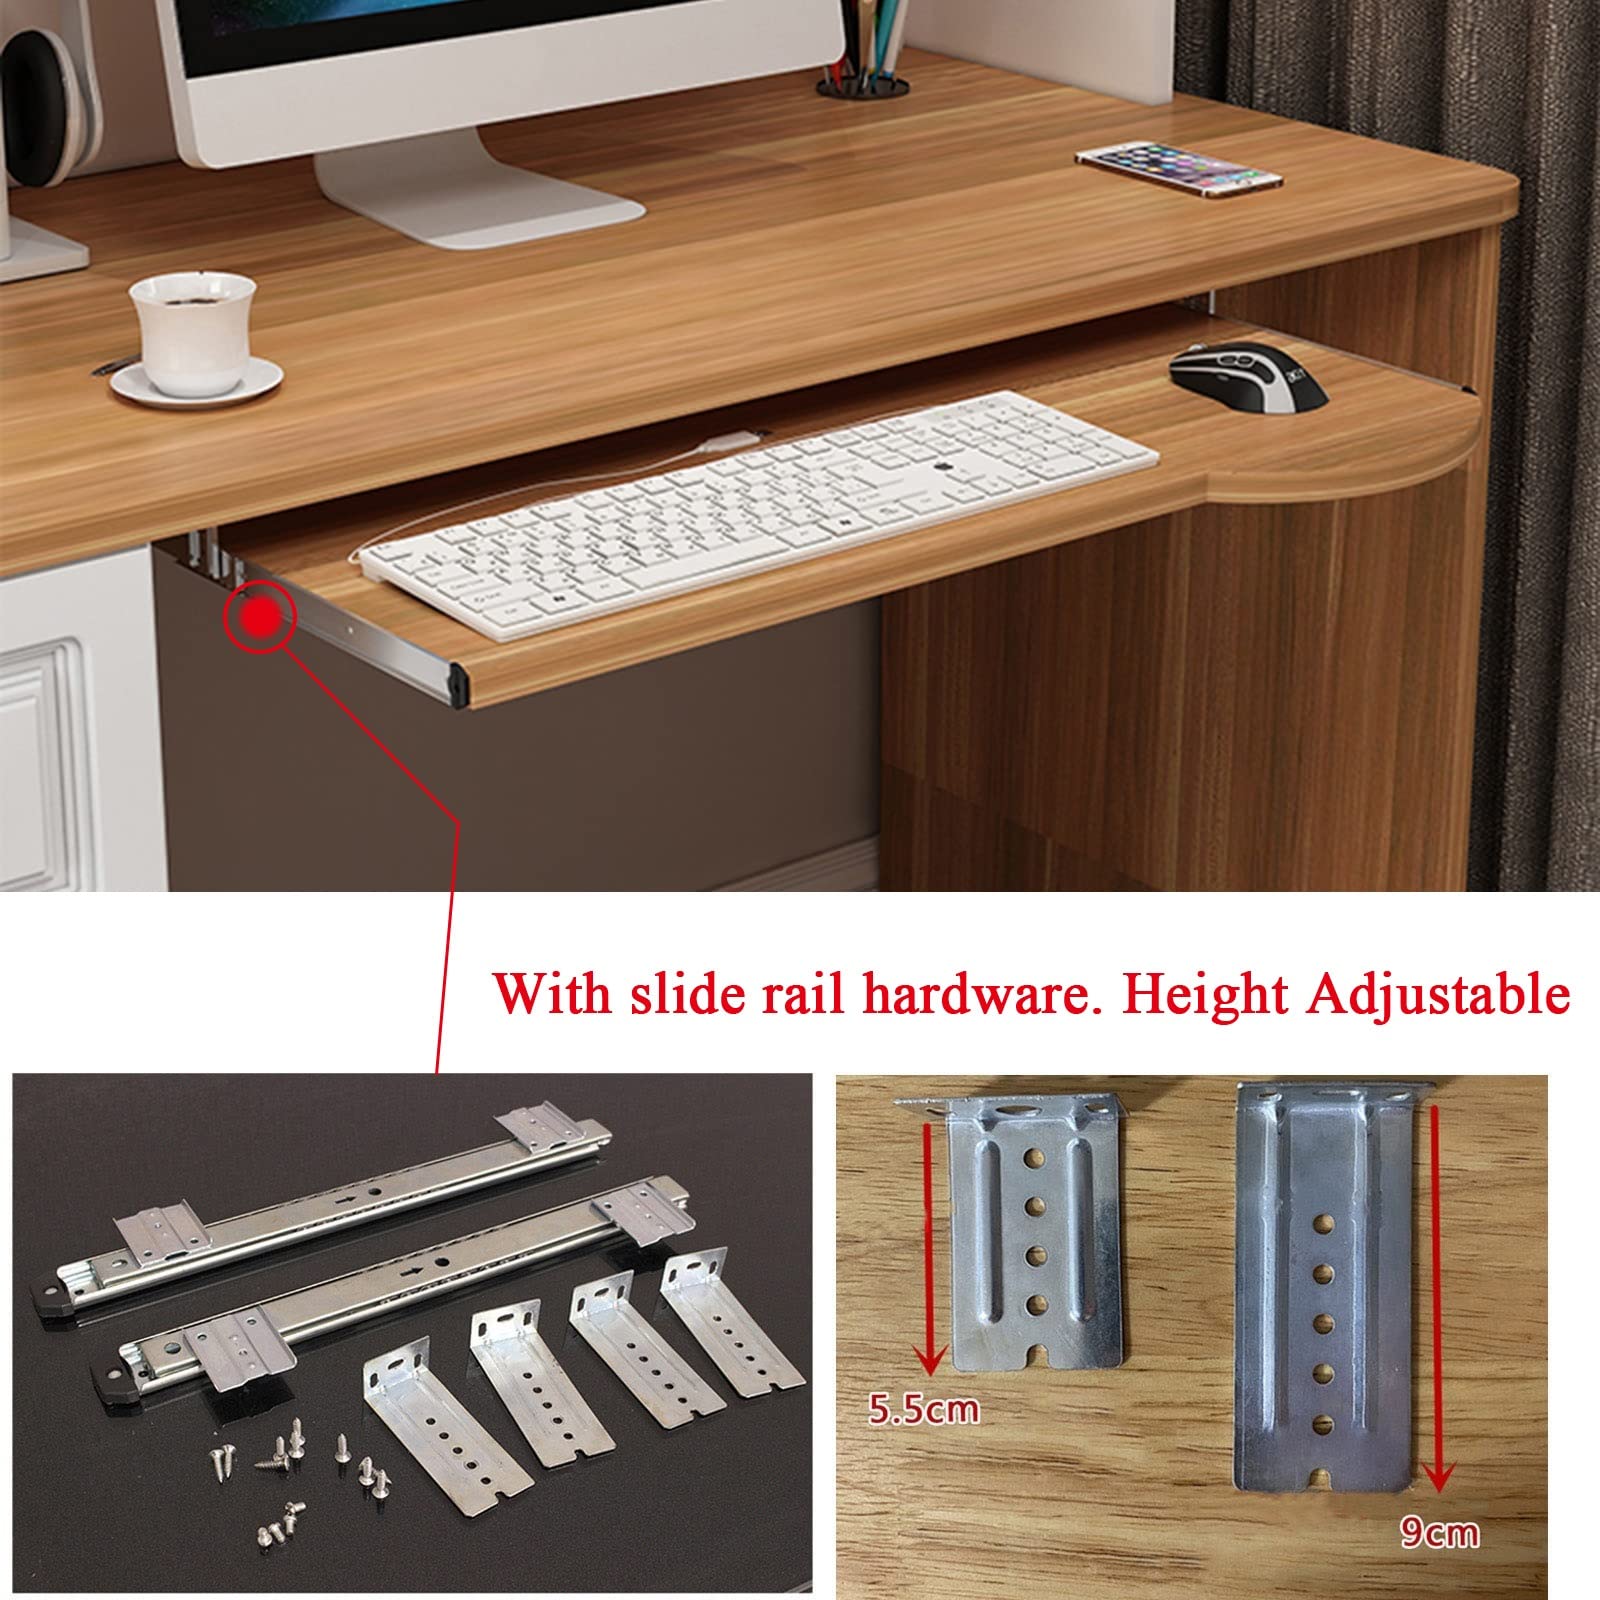 V3VOGUE Wooden Keyboard Tray Under Desk Push-Pull Keyboard Holder - Ergonomic Desk Extender Bracket 600/700x260mm, Improve Sitting Posture, Protection Eyesight, Slide Keyboard Drawer